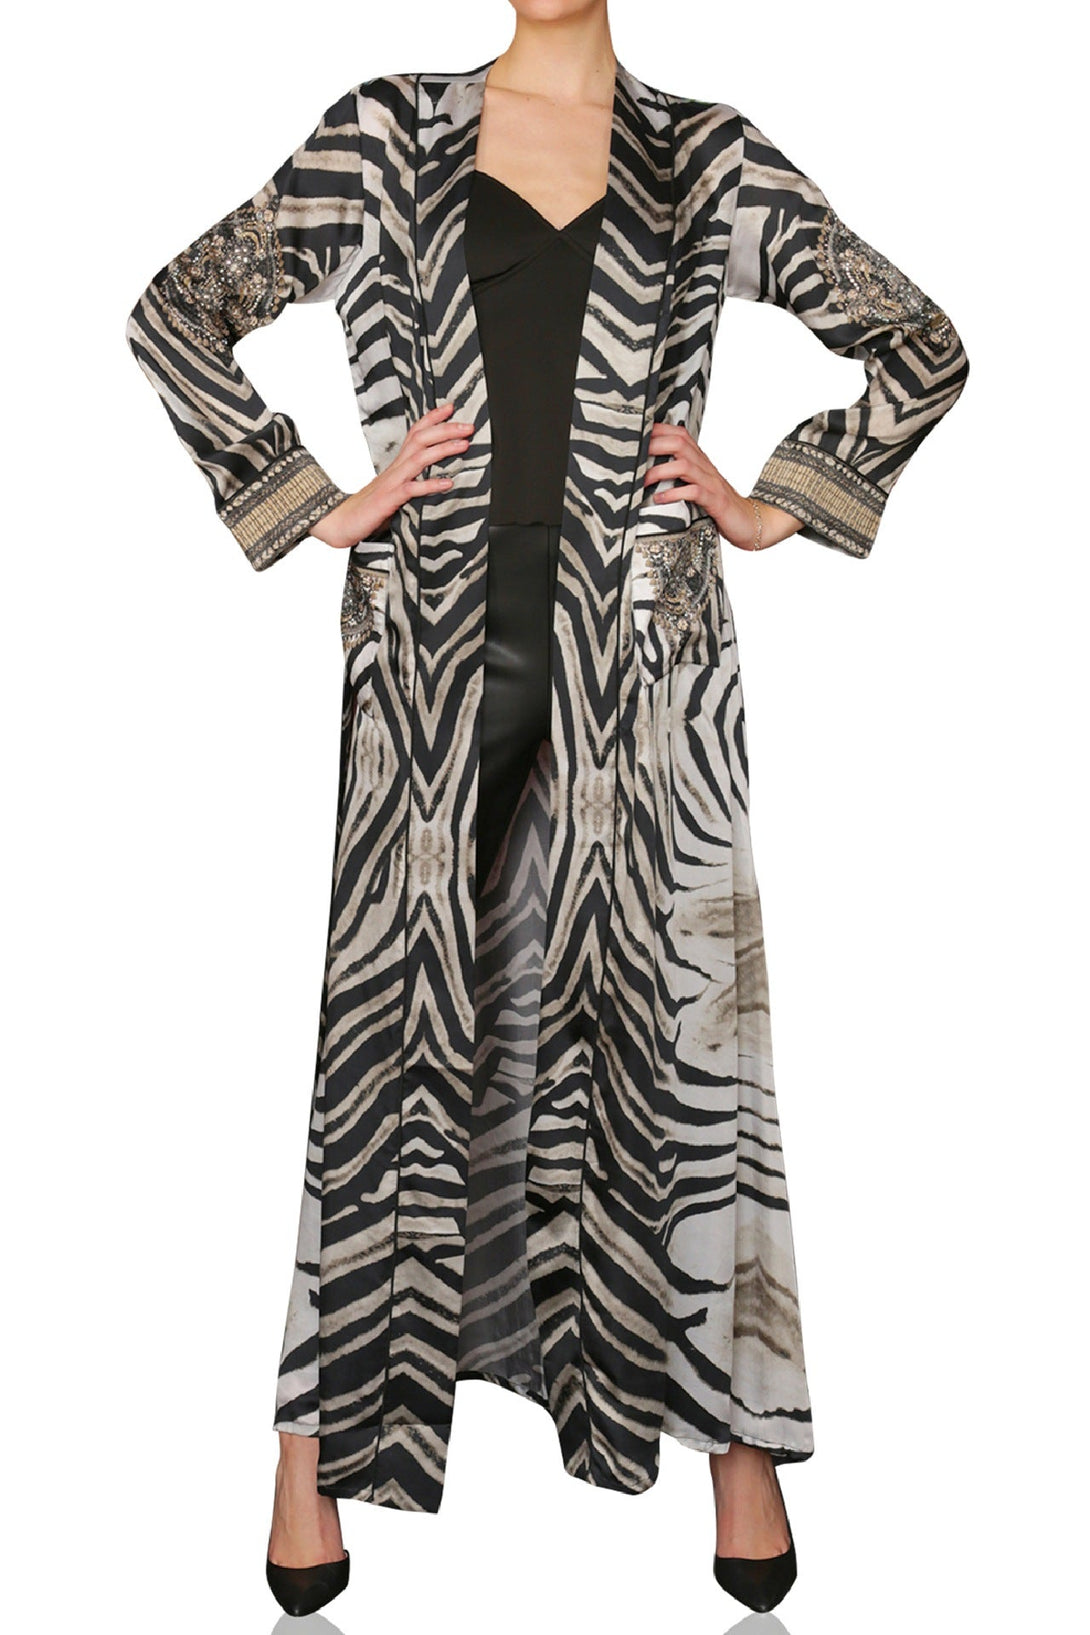 "kimono silk robe women's" "Shahida Parides" "silk zebra robe" "kimono silk robes for women" "printed silk robe" ]